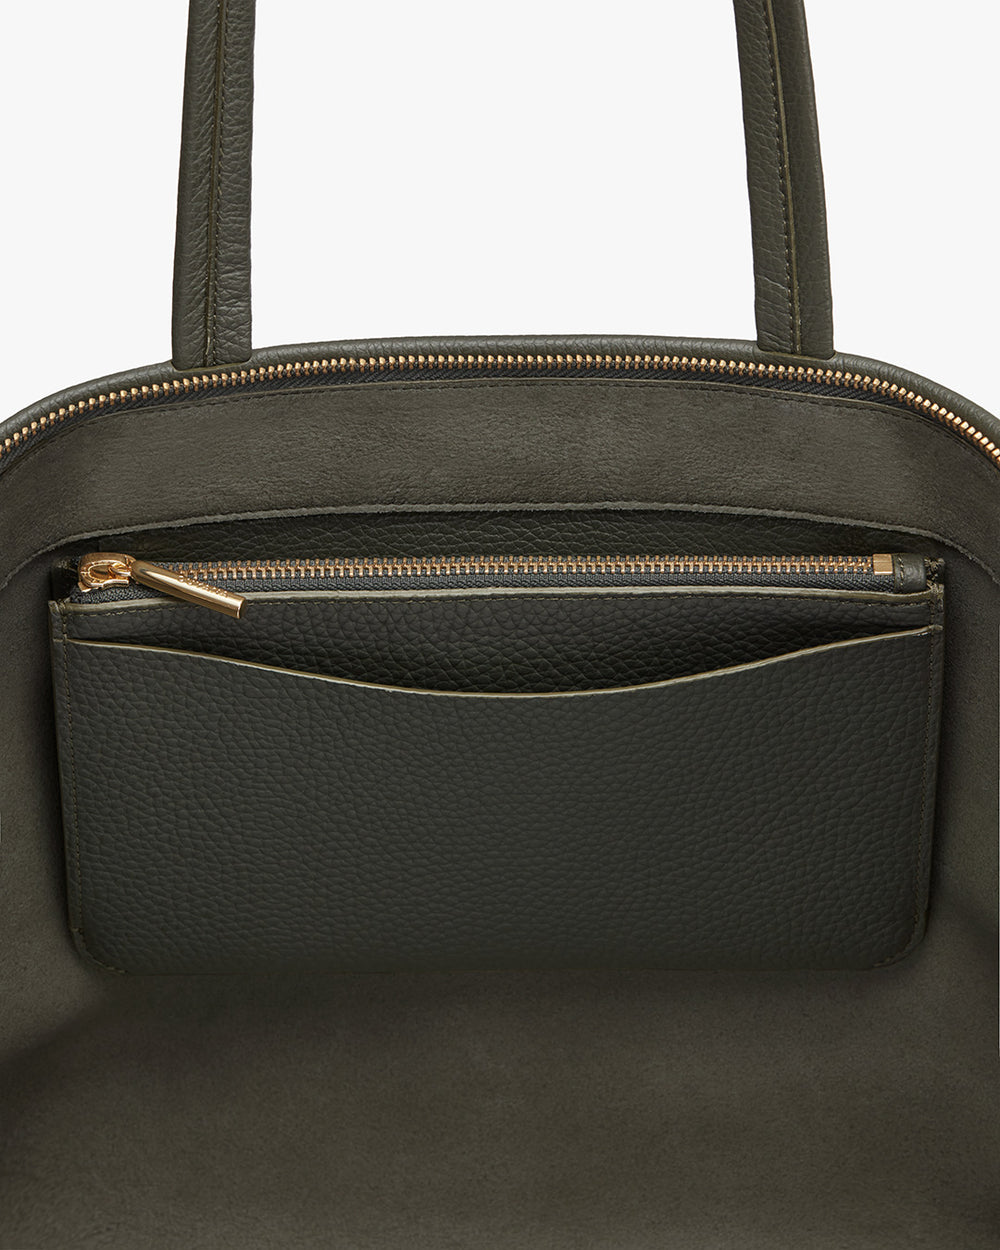 Handbag with two zippers